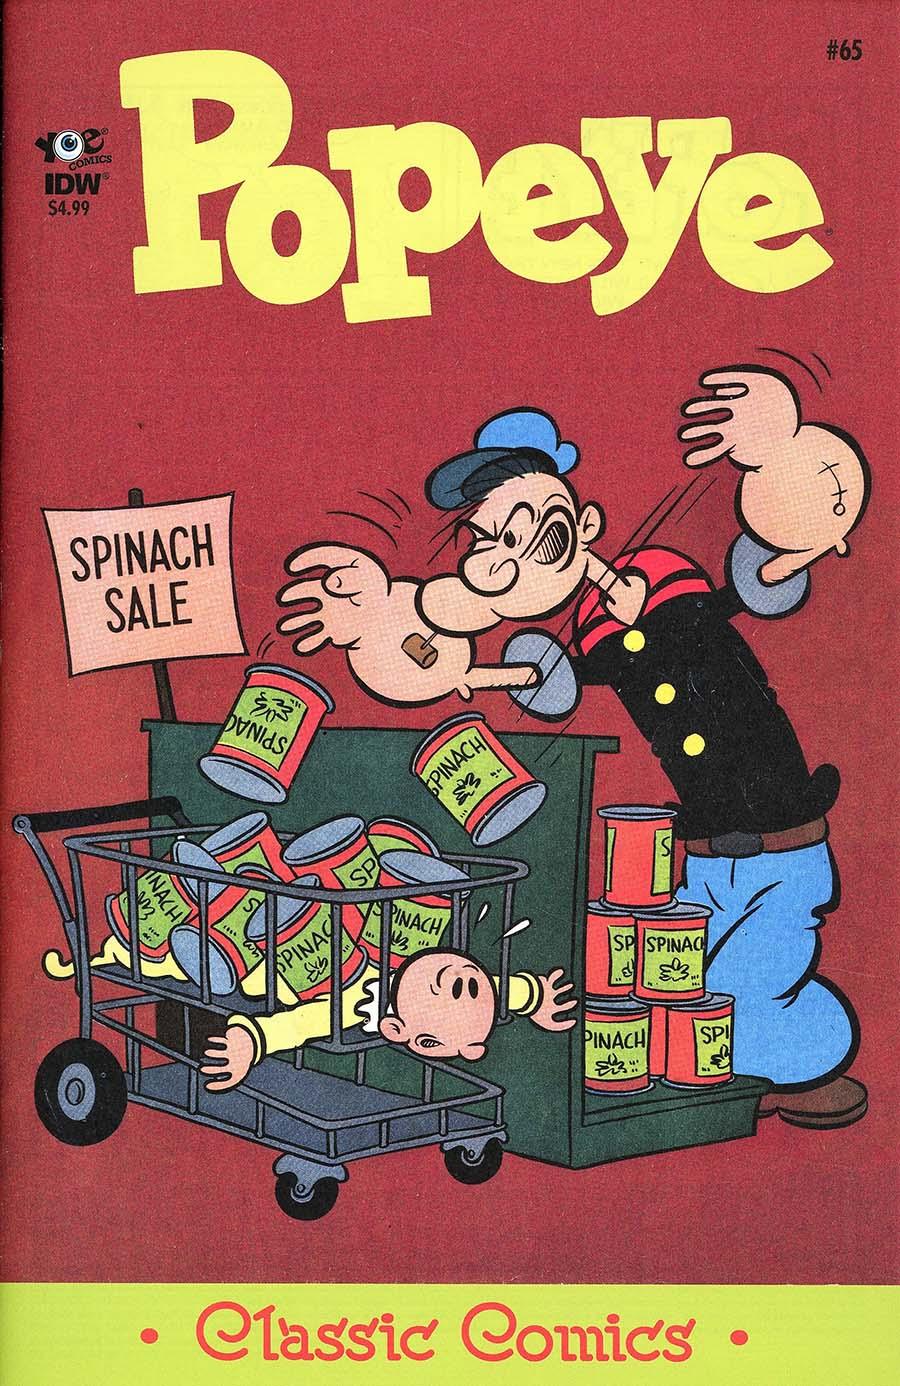 Classic Popeye Vol. 1 #65